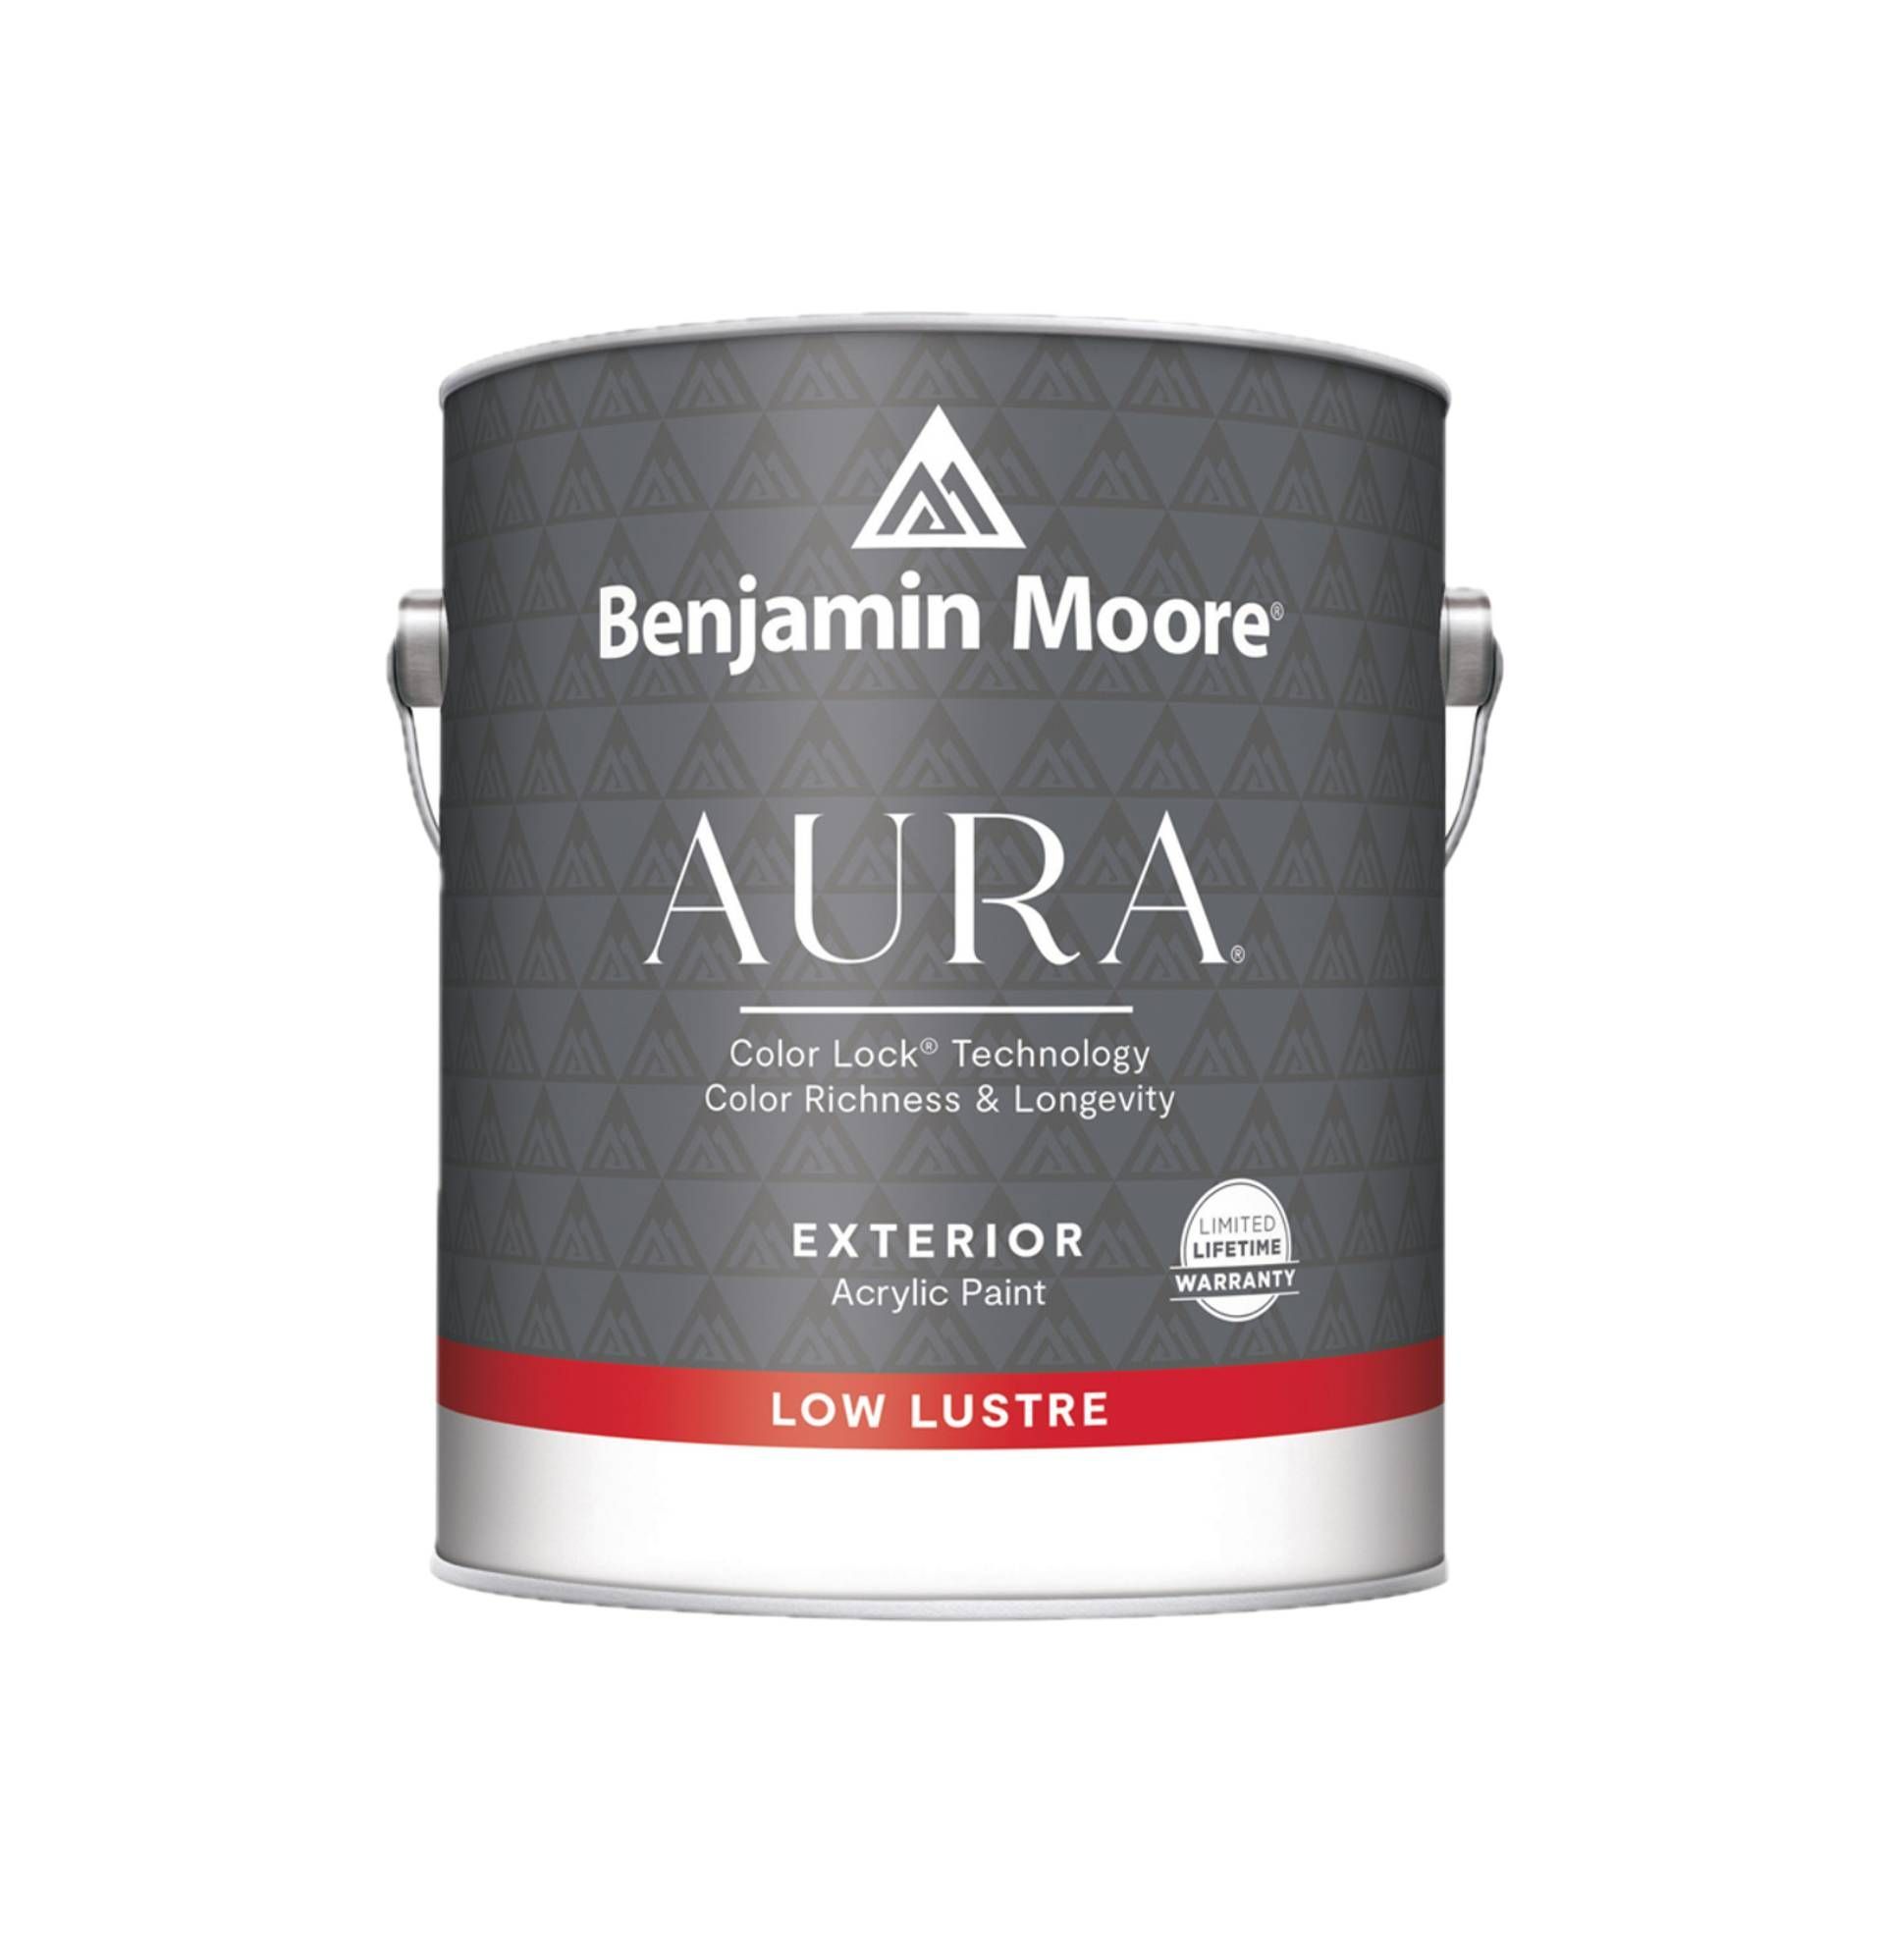 Benjamin Moore Aura® Exterior Paint near Fort Lauderdale, Florida (FL)